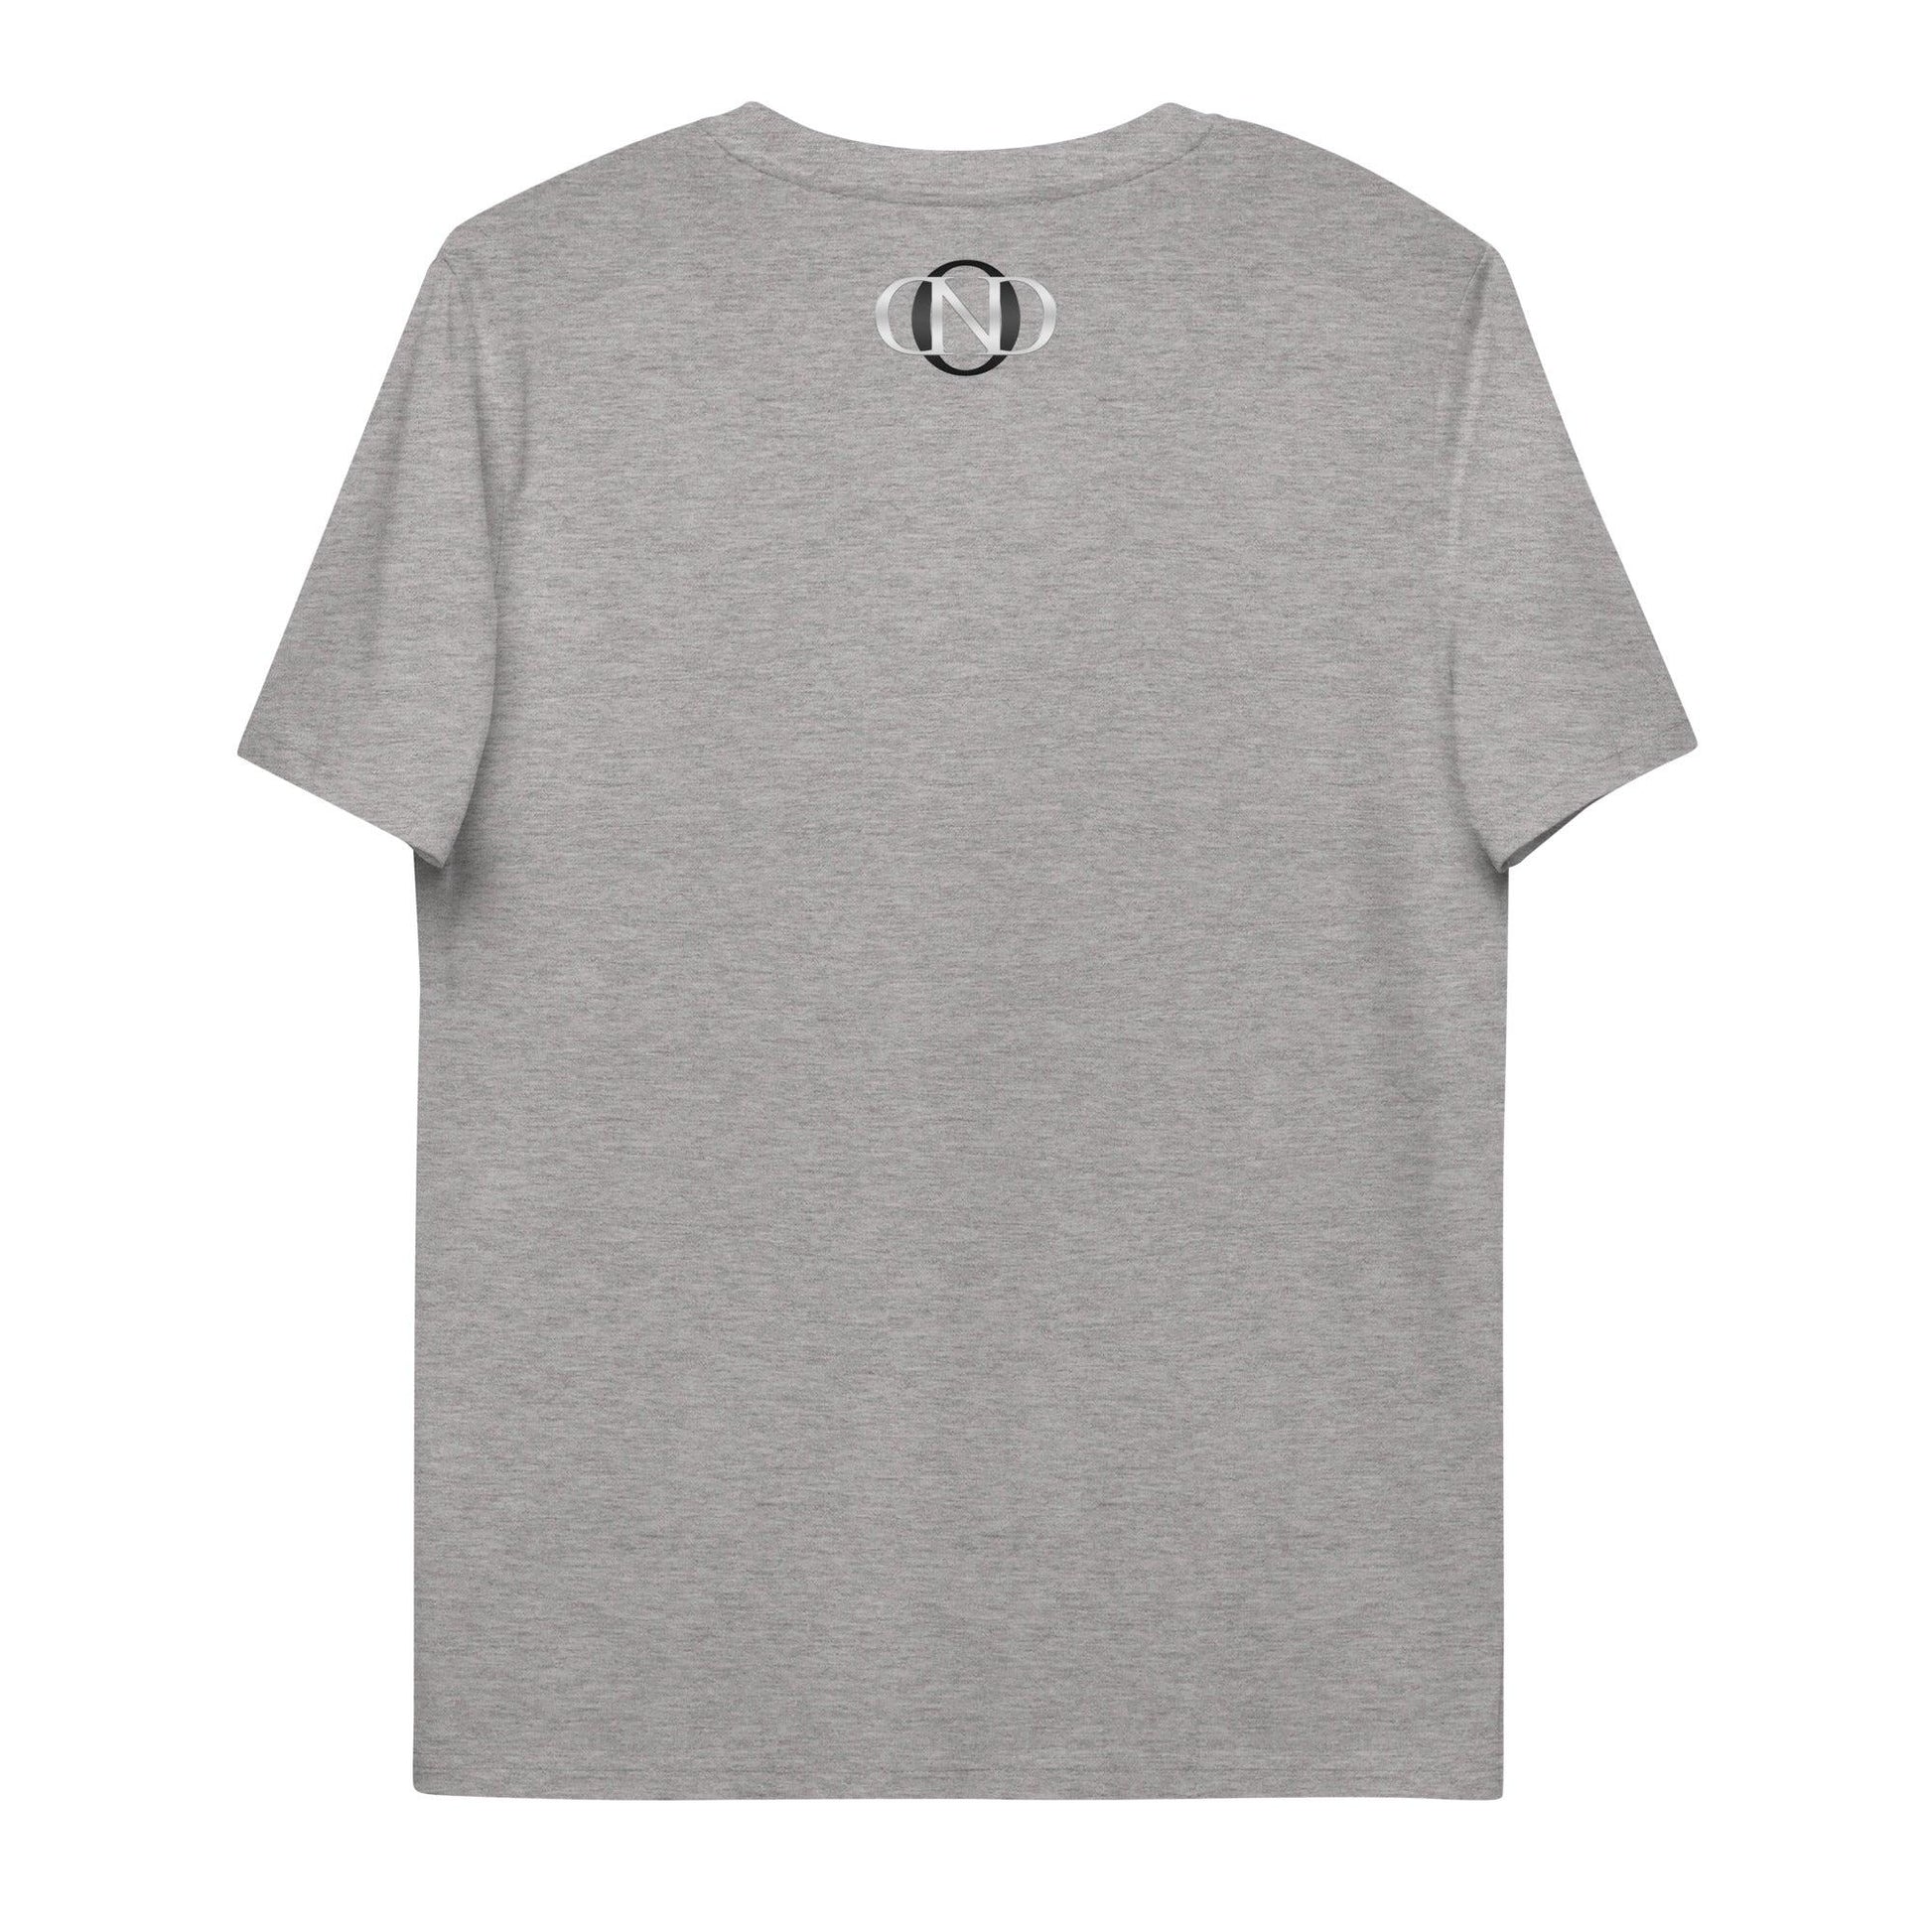 23 Neduz Designs Unisex Socialliberalerna Framtid T-Shirt -